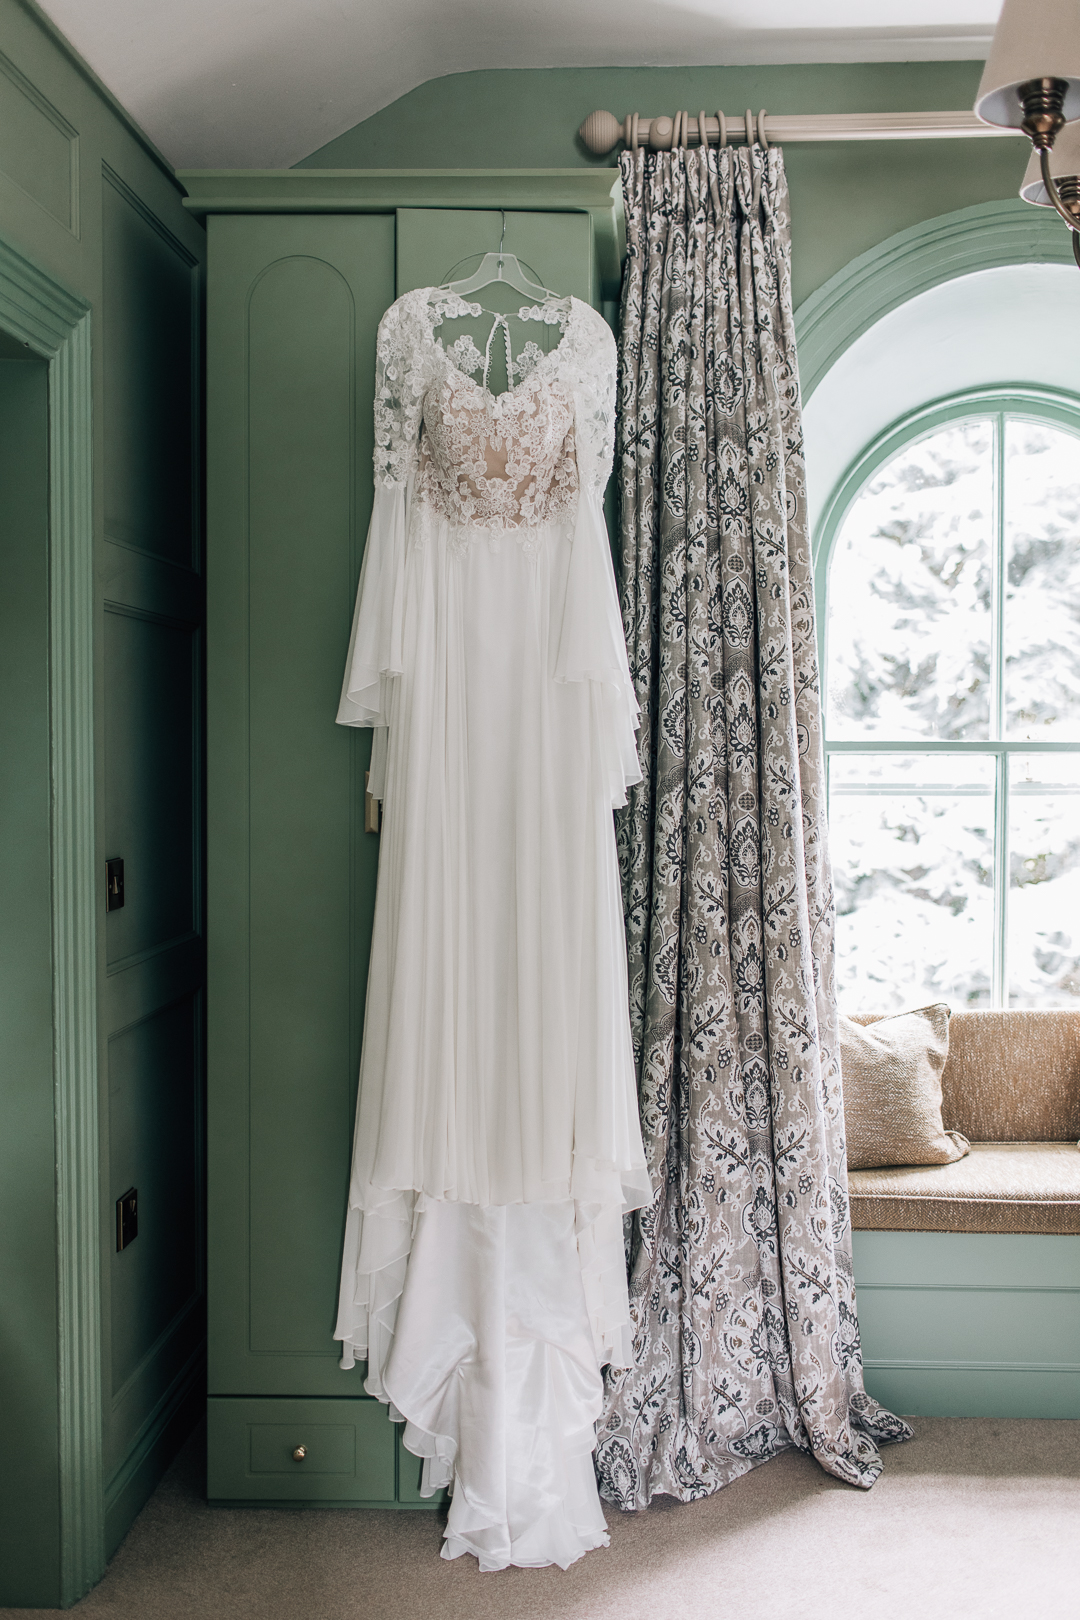 wedding dress hanging on the wardrobe